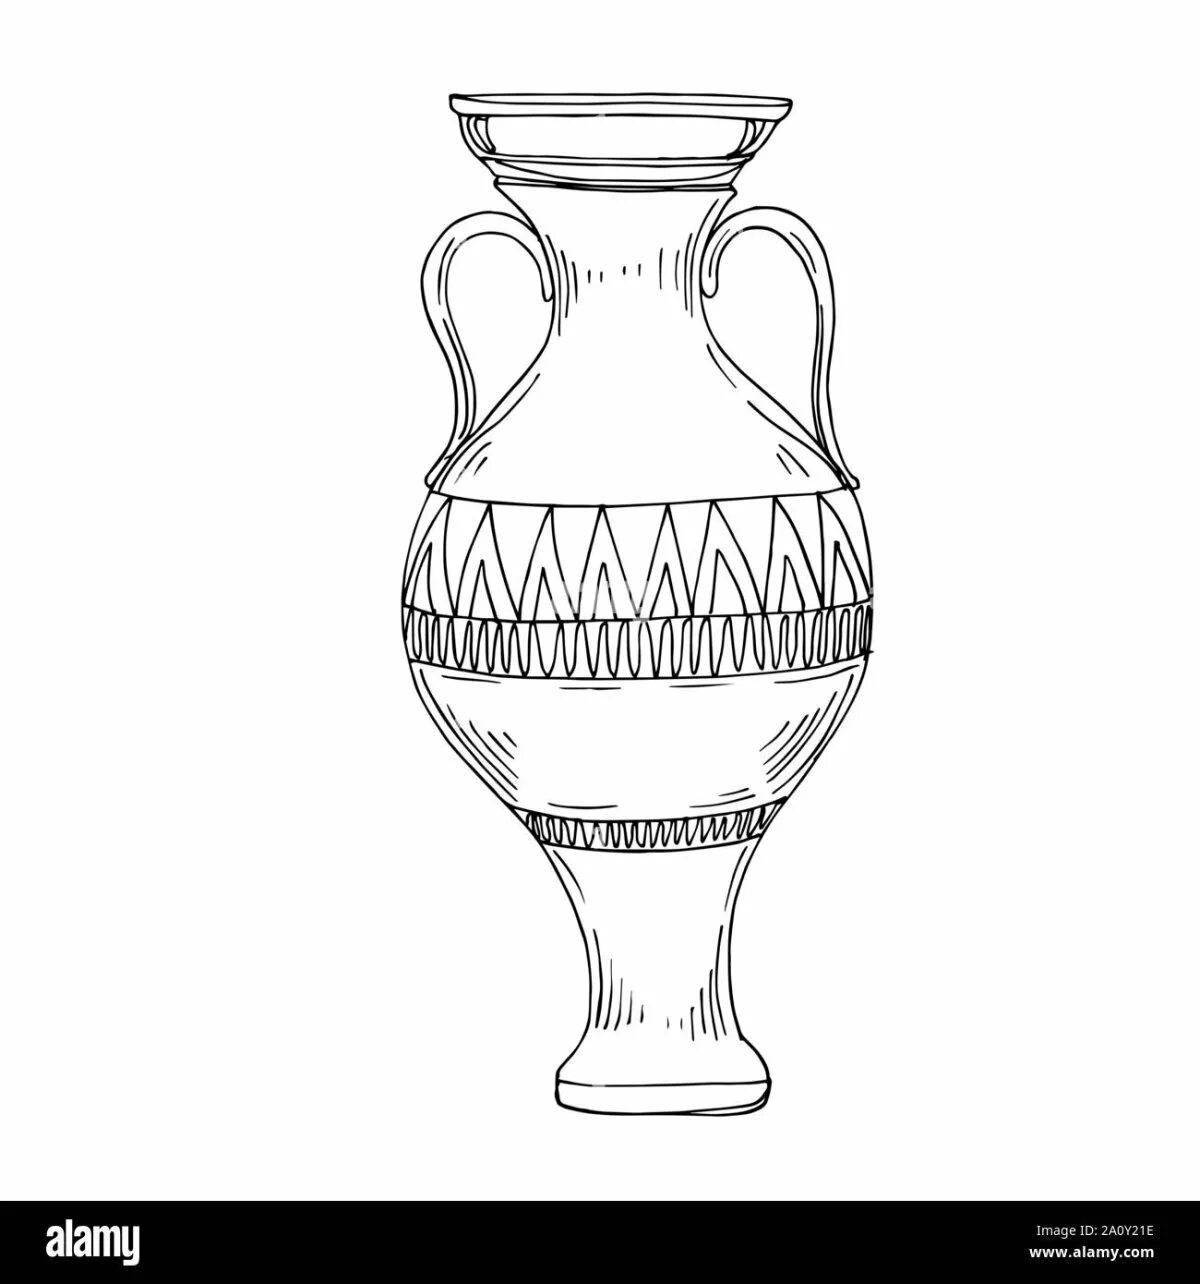 Coloring page dramatic Greek vase